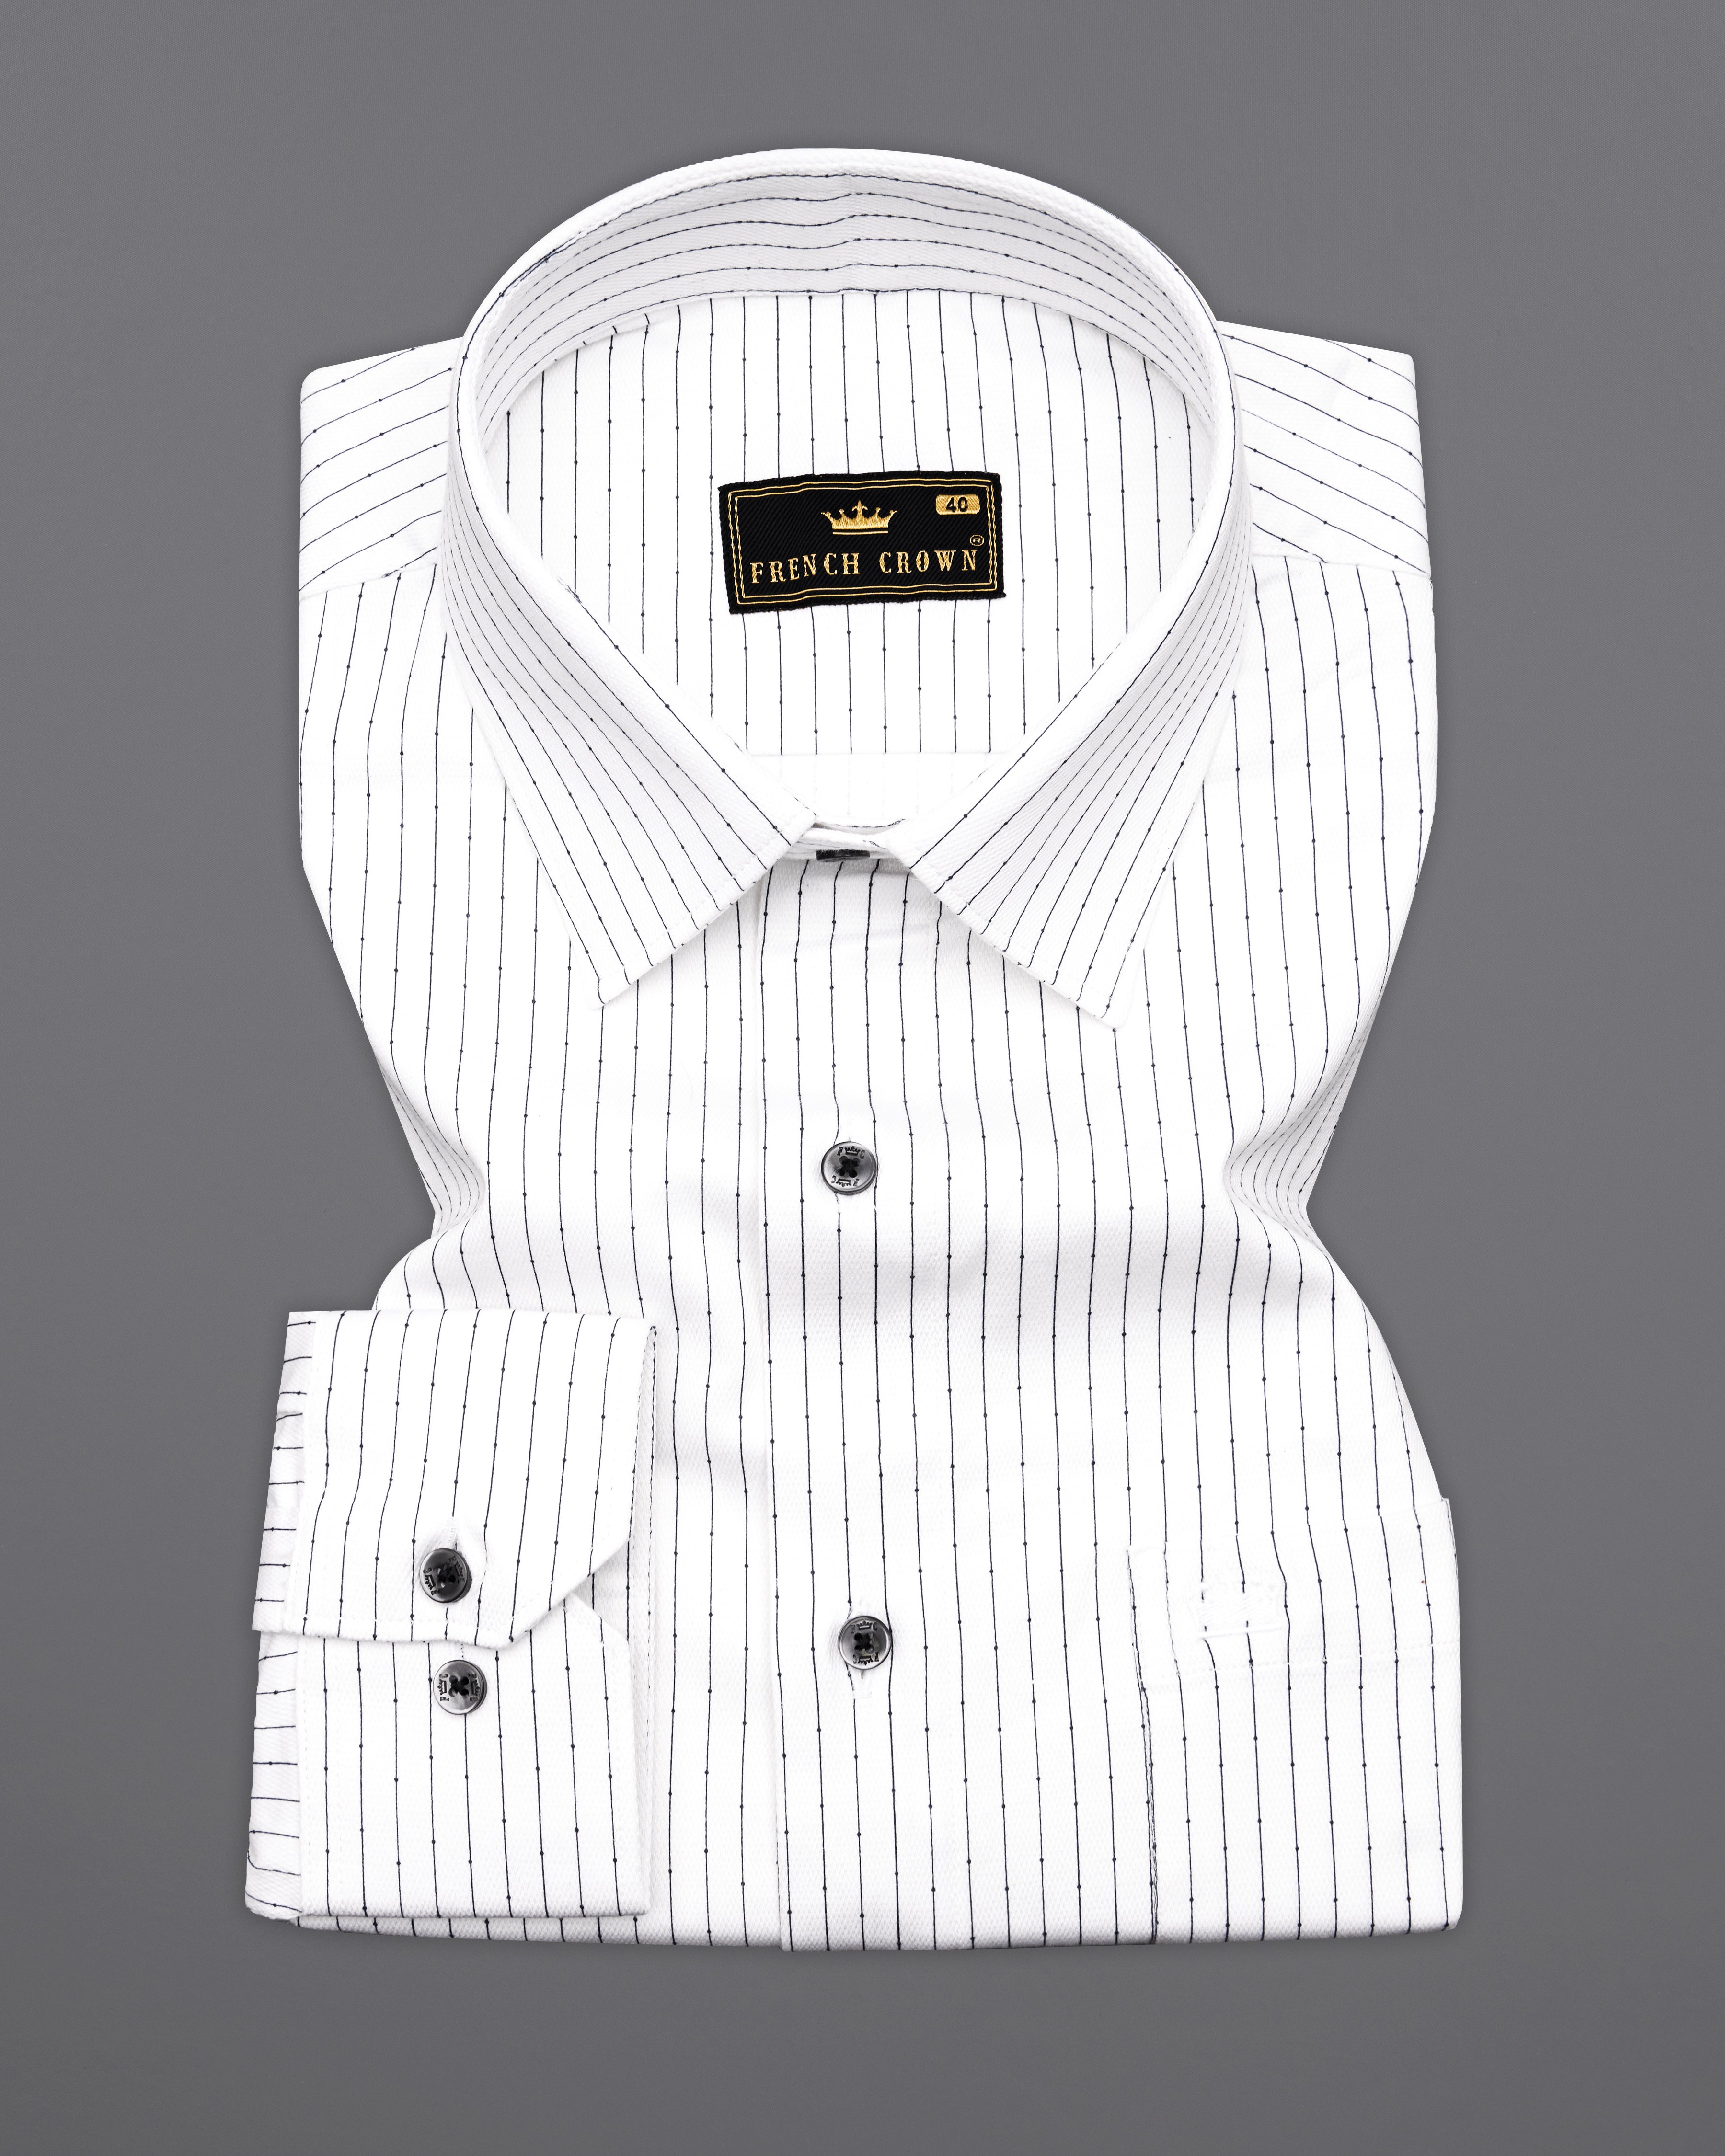 Bright White with Black Striped Dobby Textured Premium Giza Cotton Designer Shirt 9943-BLK-38, 9943-BLK-H-38, 9943-BLK-39, 9943-BLK-H-39, 9943-BLK-40, 9943-BLK-H-40, 9943-BLK-42, 9943-BLK-H-42, 9943-BLK-44, 9943-BLK-H-44, 9943-BLK-46, 9943-BLK-H-46, 9943-BLK-48, 9943-BLK-H-48, 9943-BLK-50, 9943-BLK-H-50, 9943-BLK-52, 9943-BLK-H-52